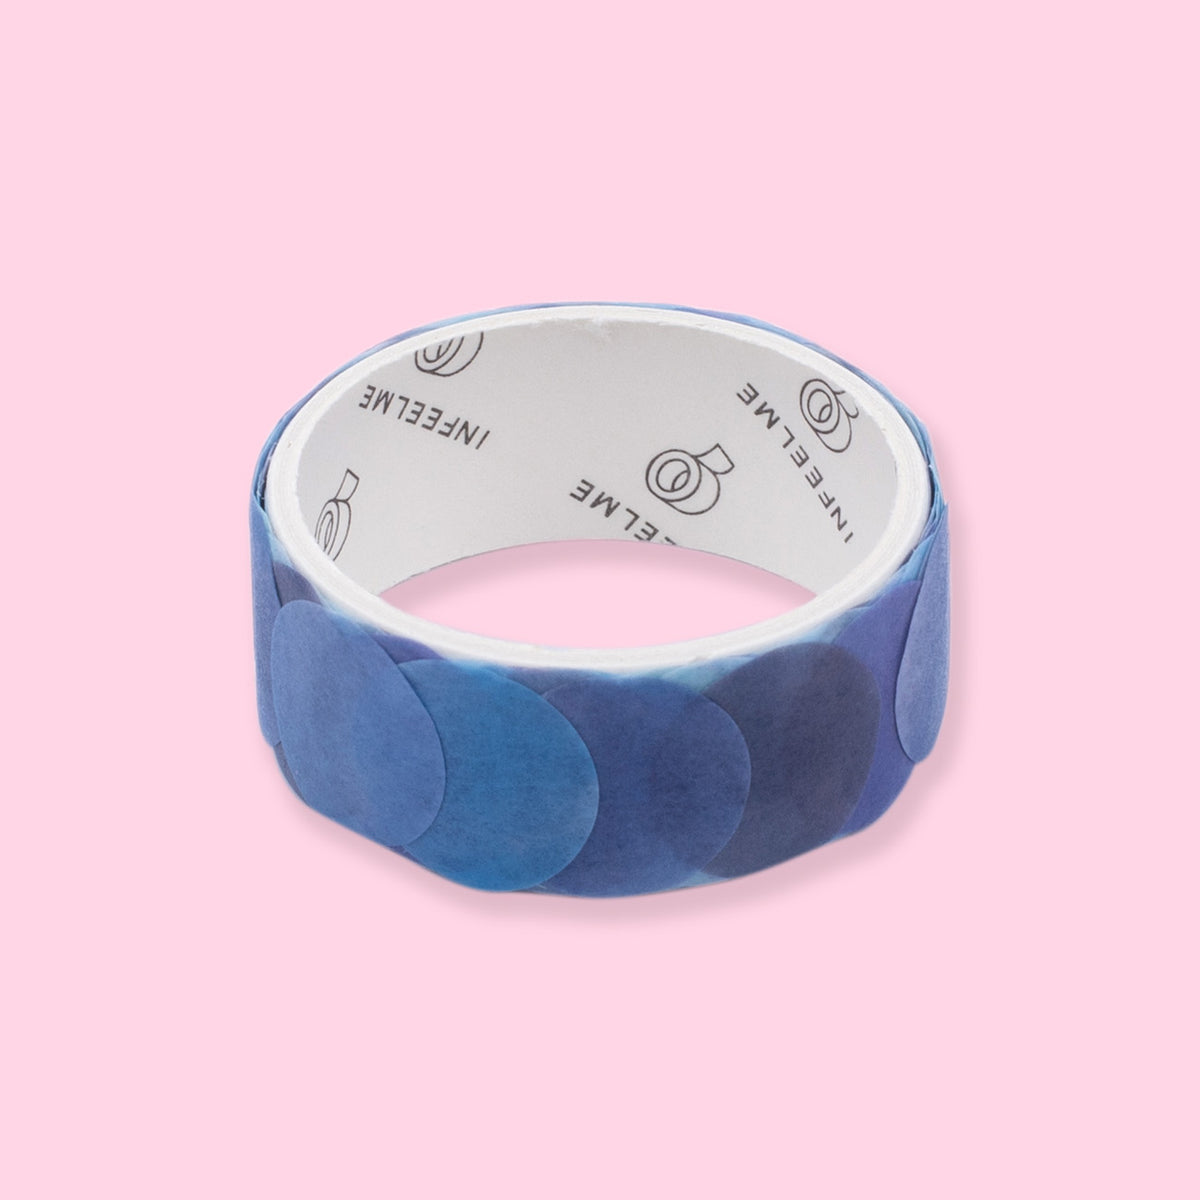 Blue Washi Tape Dots • Buy Washi Tape Dots! • Vera's Arts & Dice